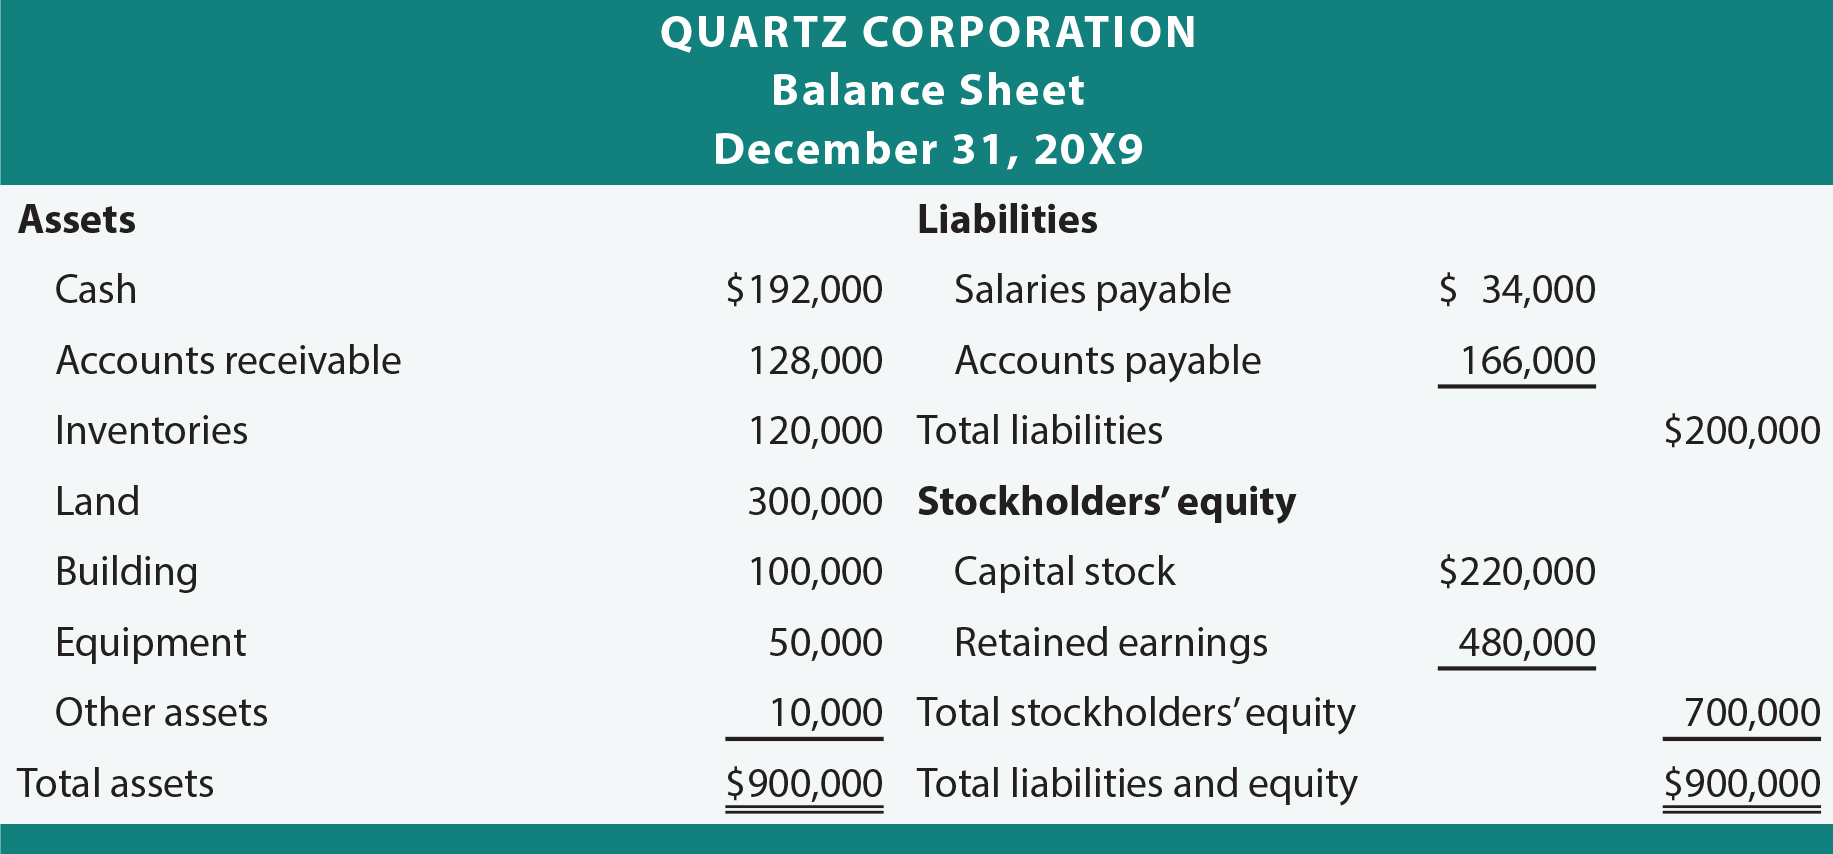 Quartz Corporation Balance Sheet